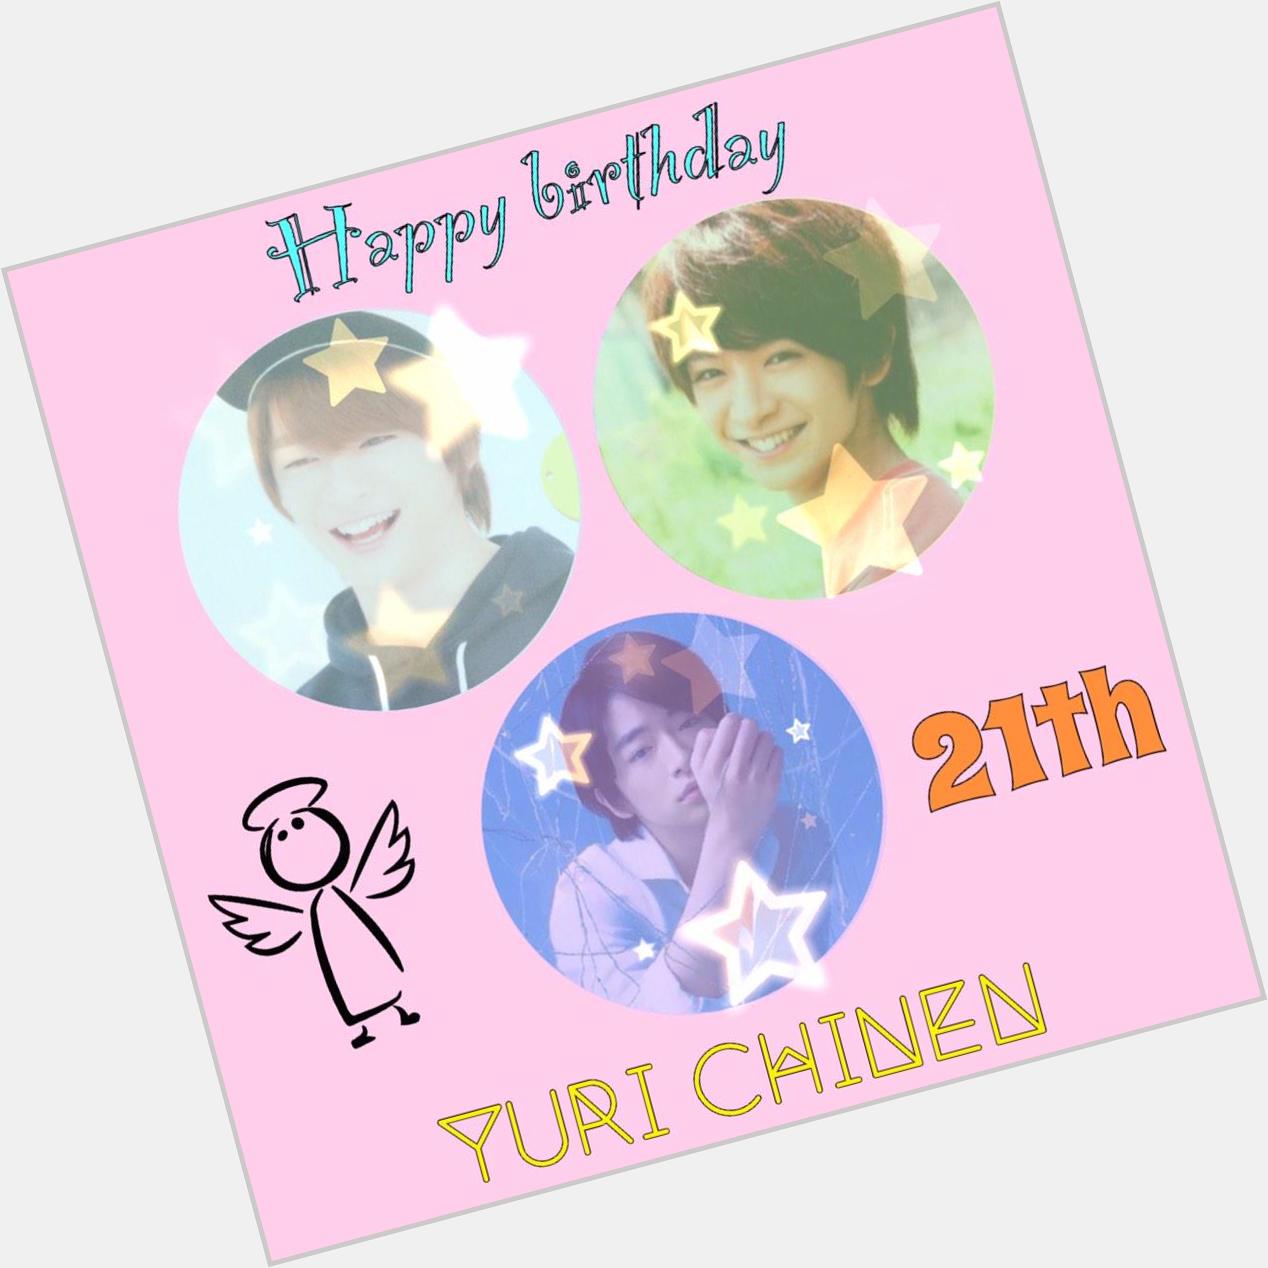 2014.11.30 Yuri Chinen
Happy birthday               21  1                                                          